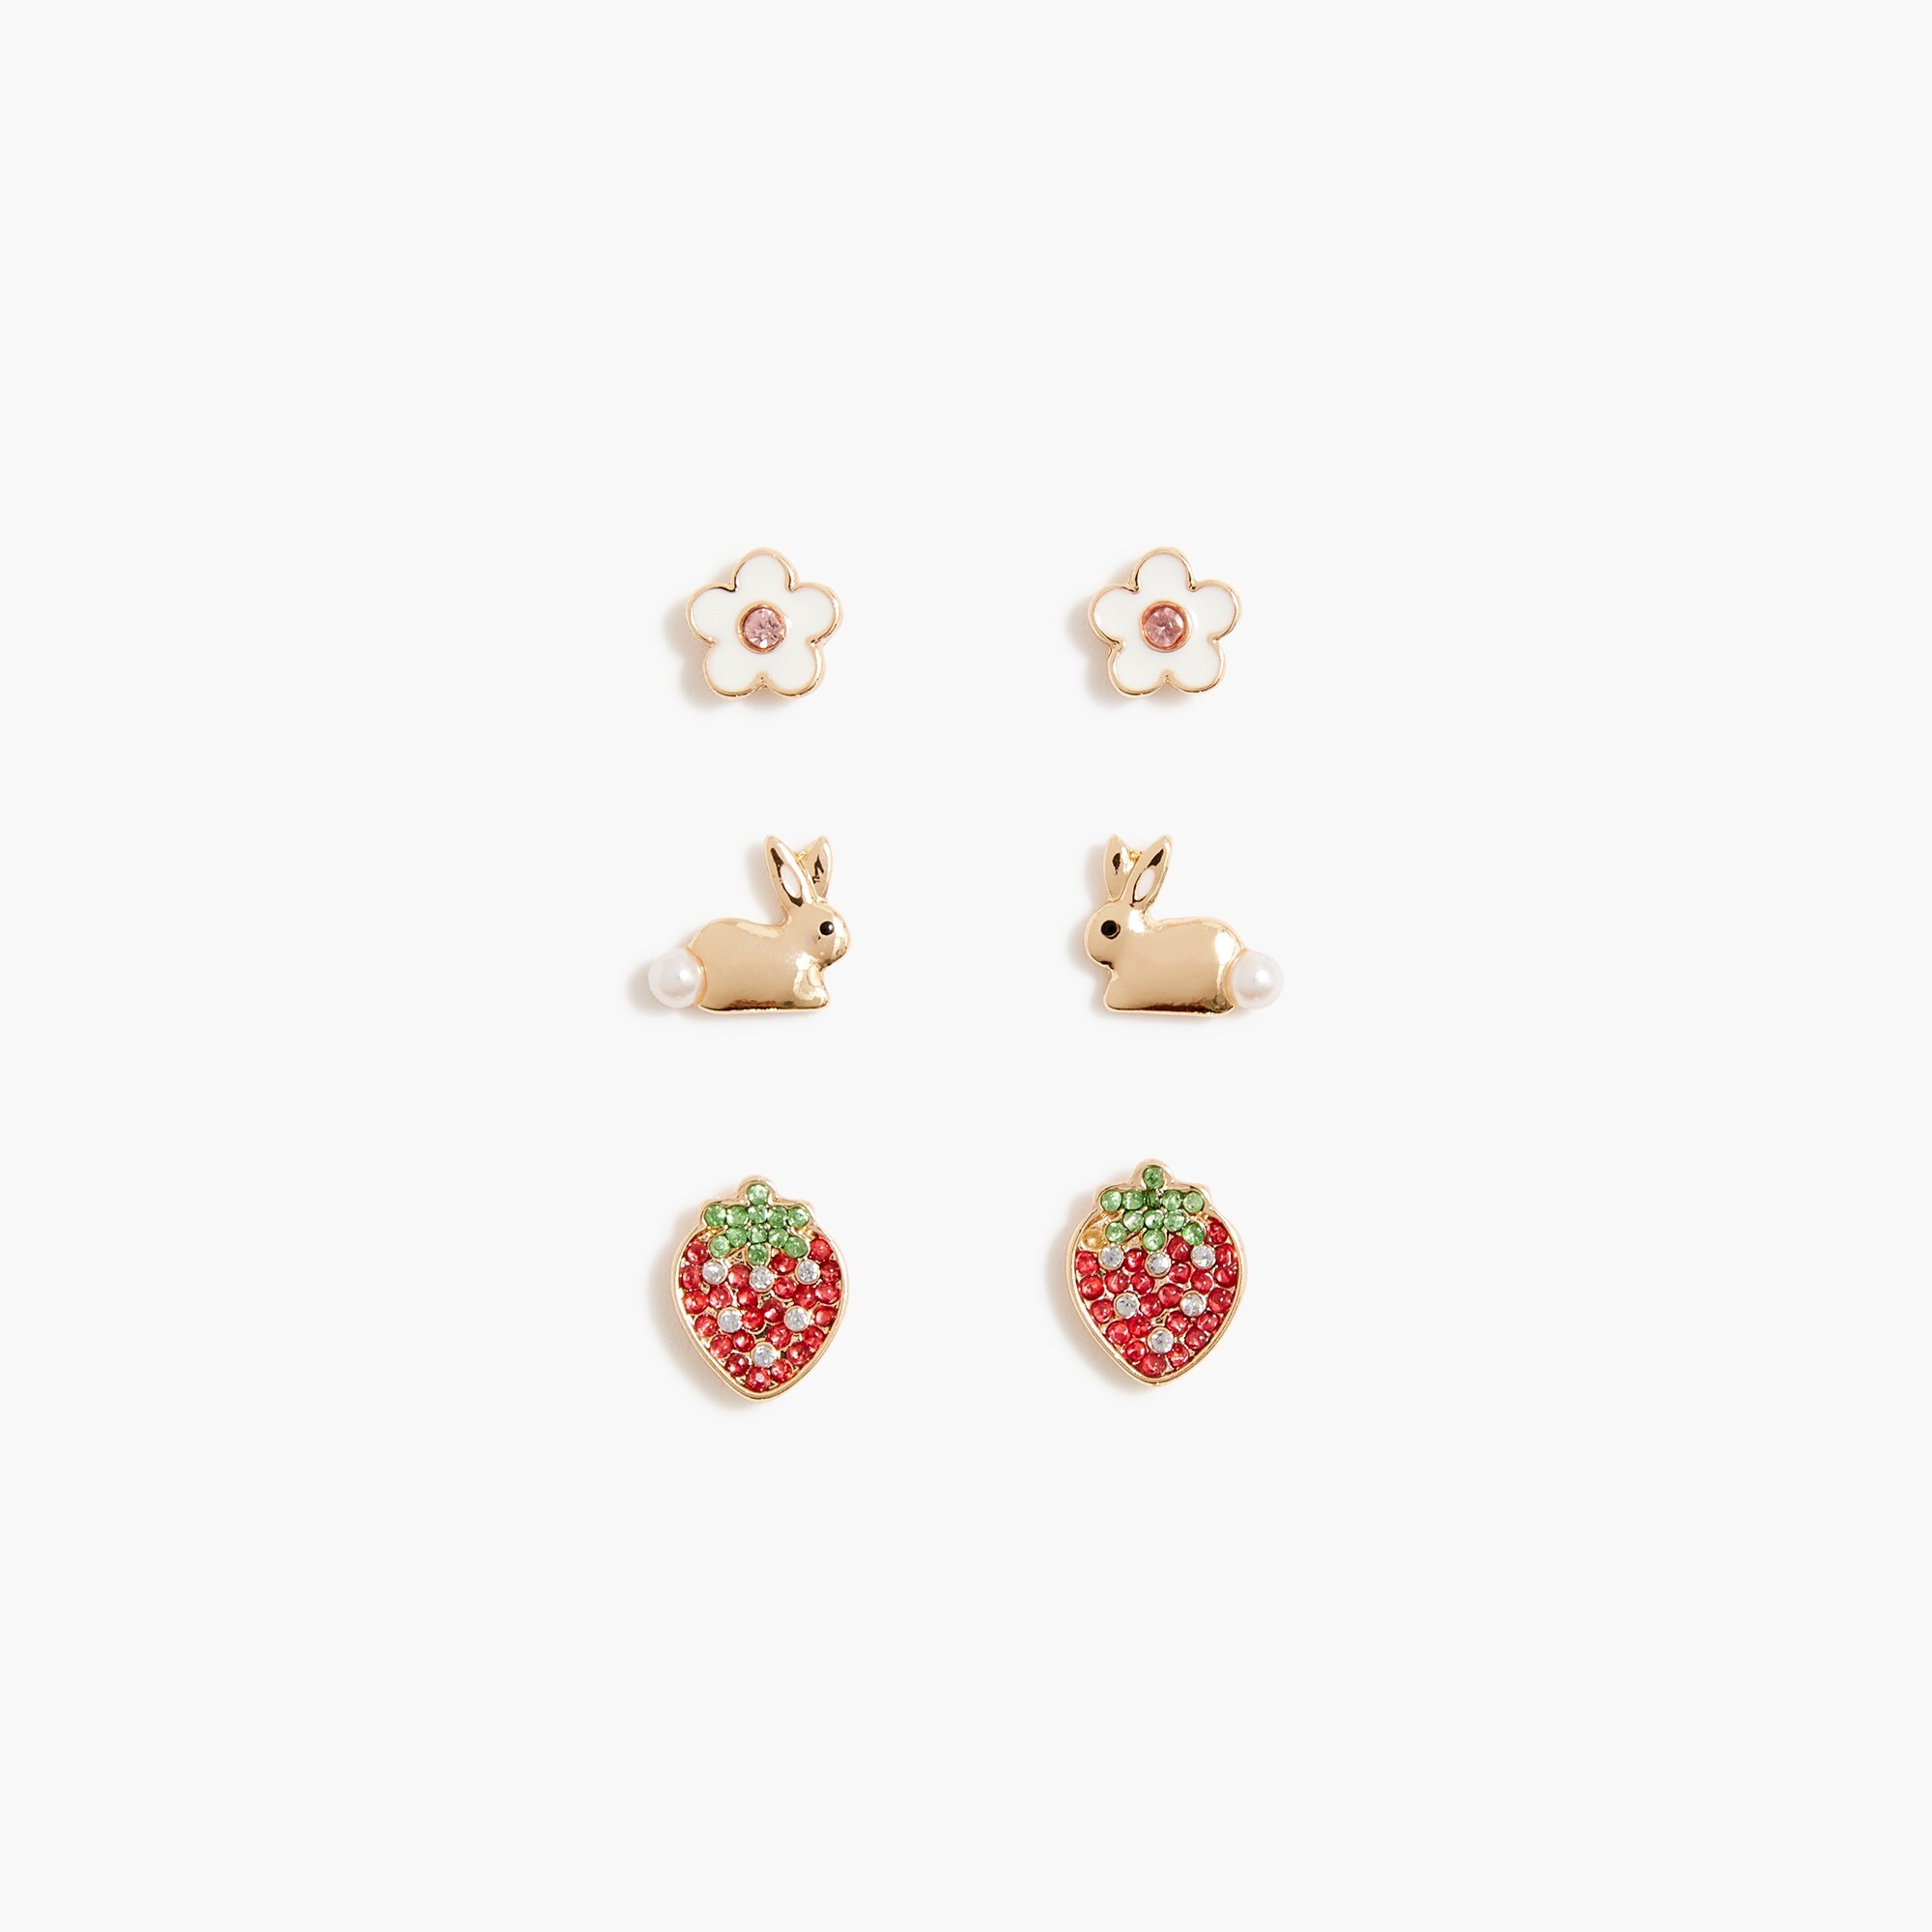  Girls' spring earrings set-of-three